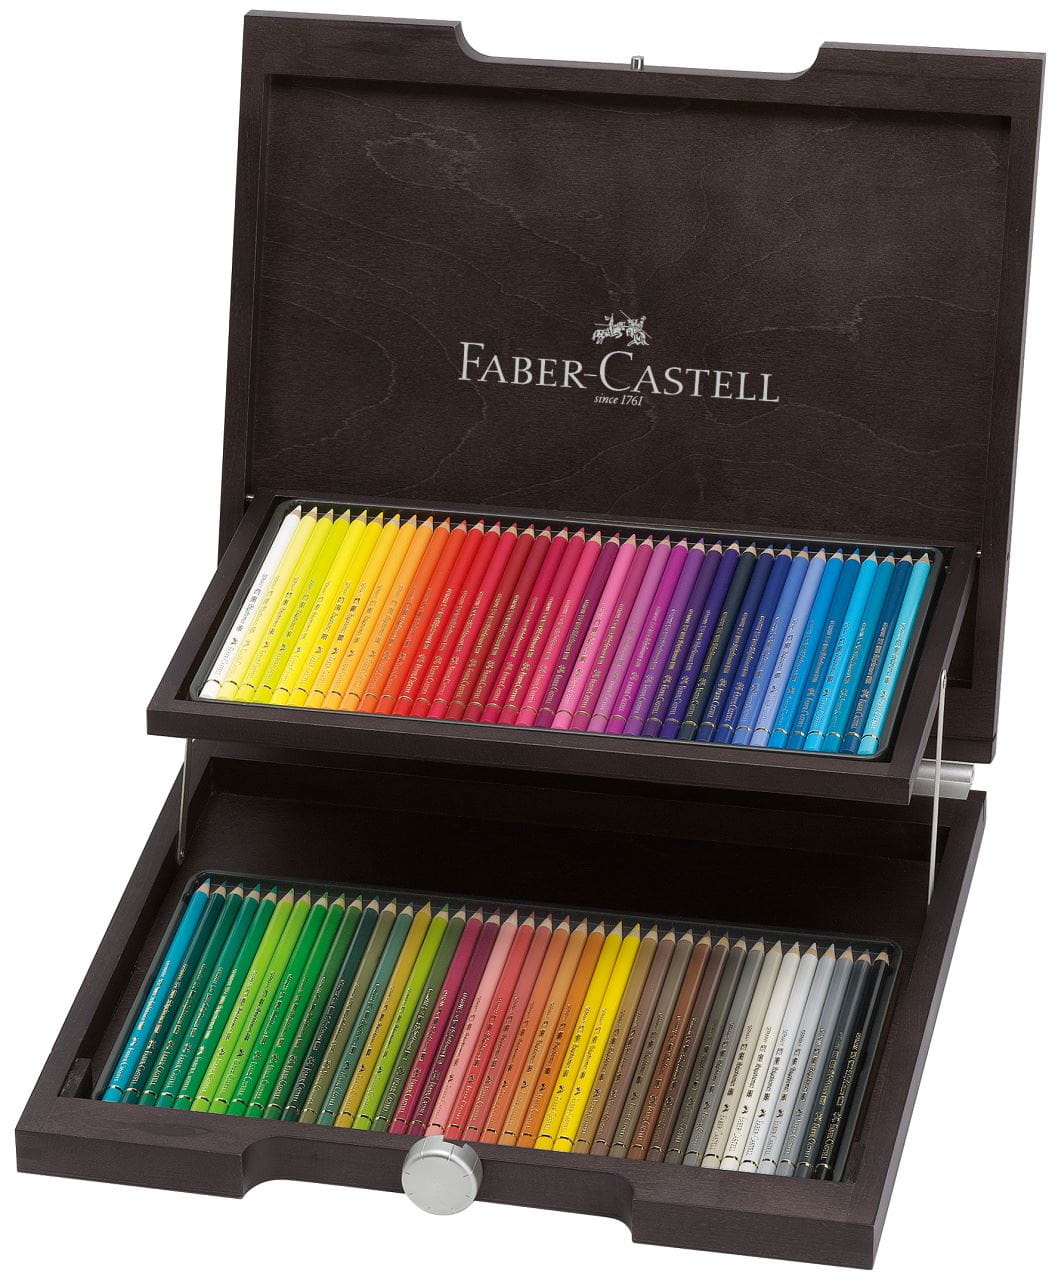 Faber-Castell - Matite Colorate Polychromos Valigetta legno 72